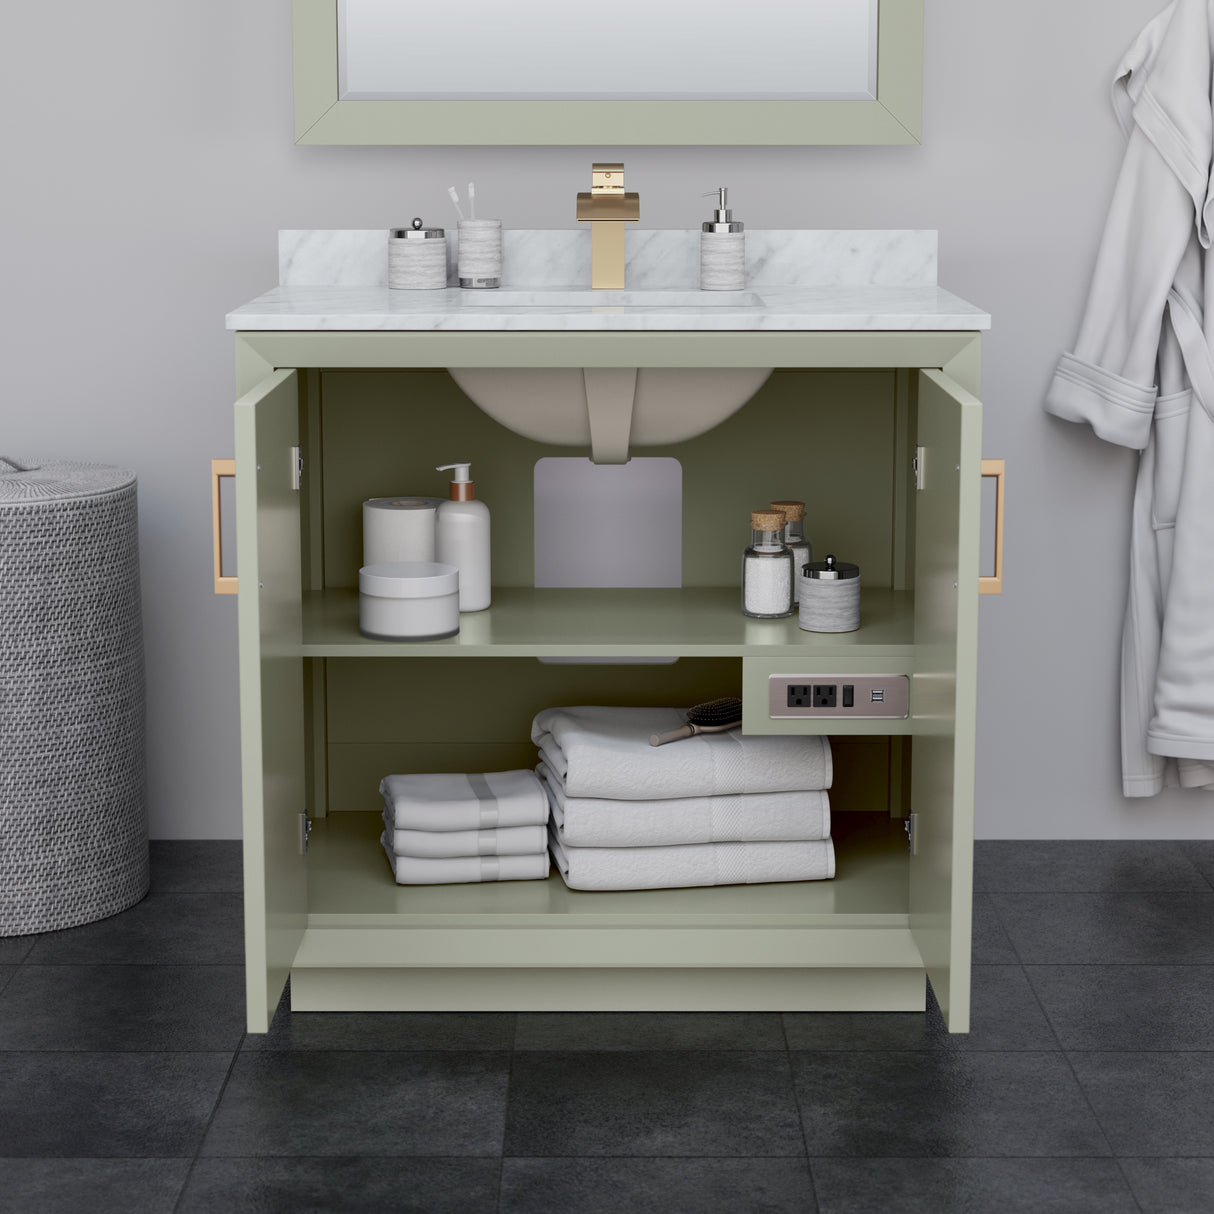 Strada 36 Inch Single Bathroom Vanity in Light Green White Cultured Marble Countertop Undermount Square Sink Matte Black Trim